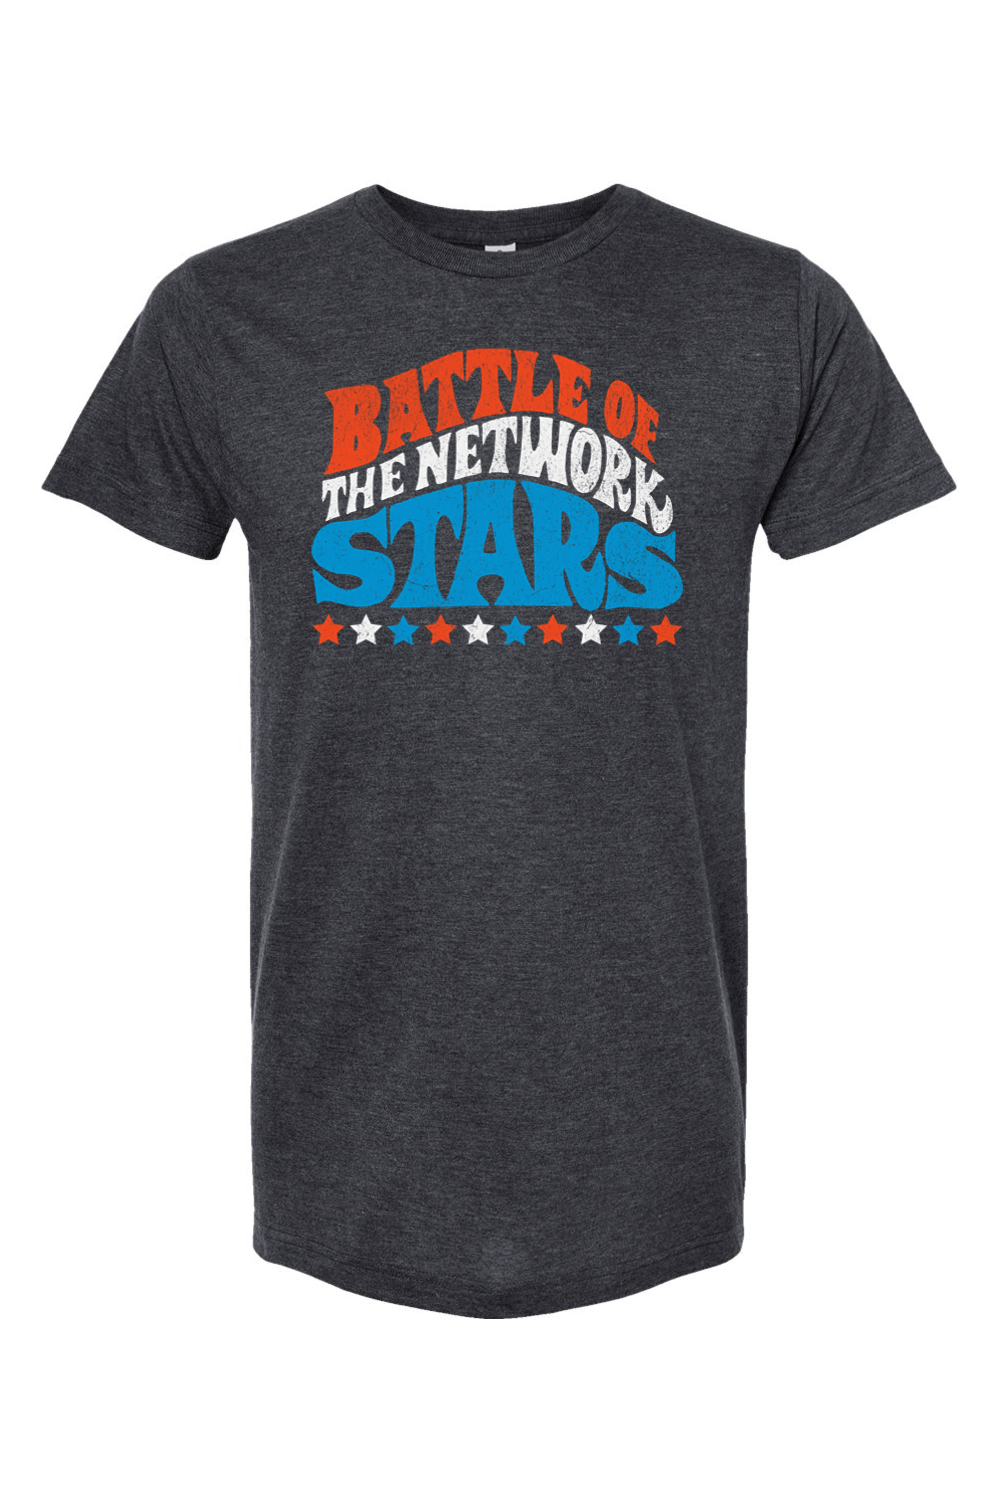 Battle of the Network Stars - T-Shirt - Yinzylvania